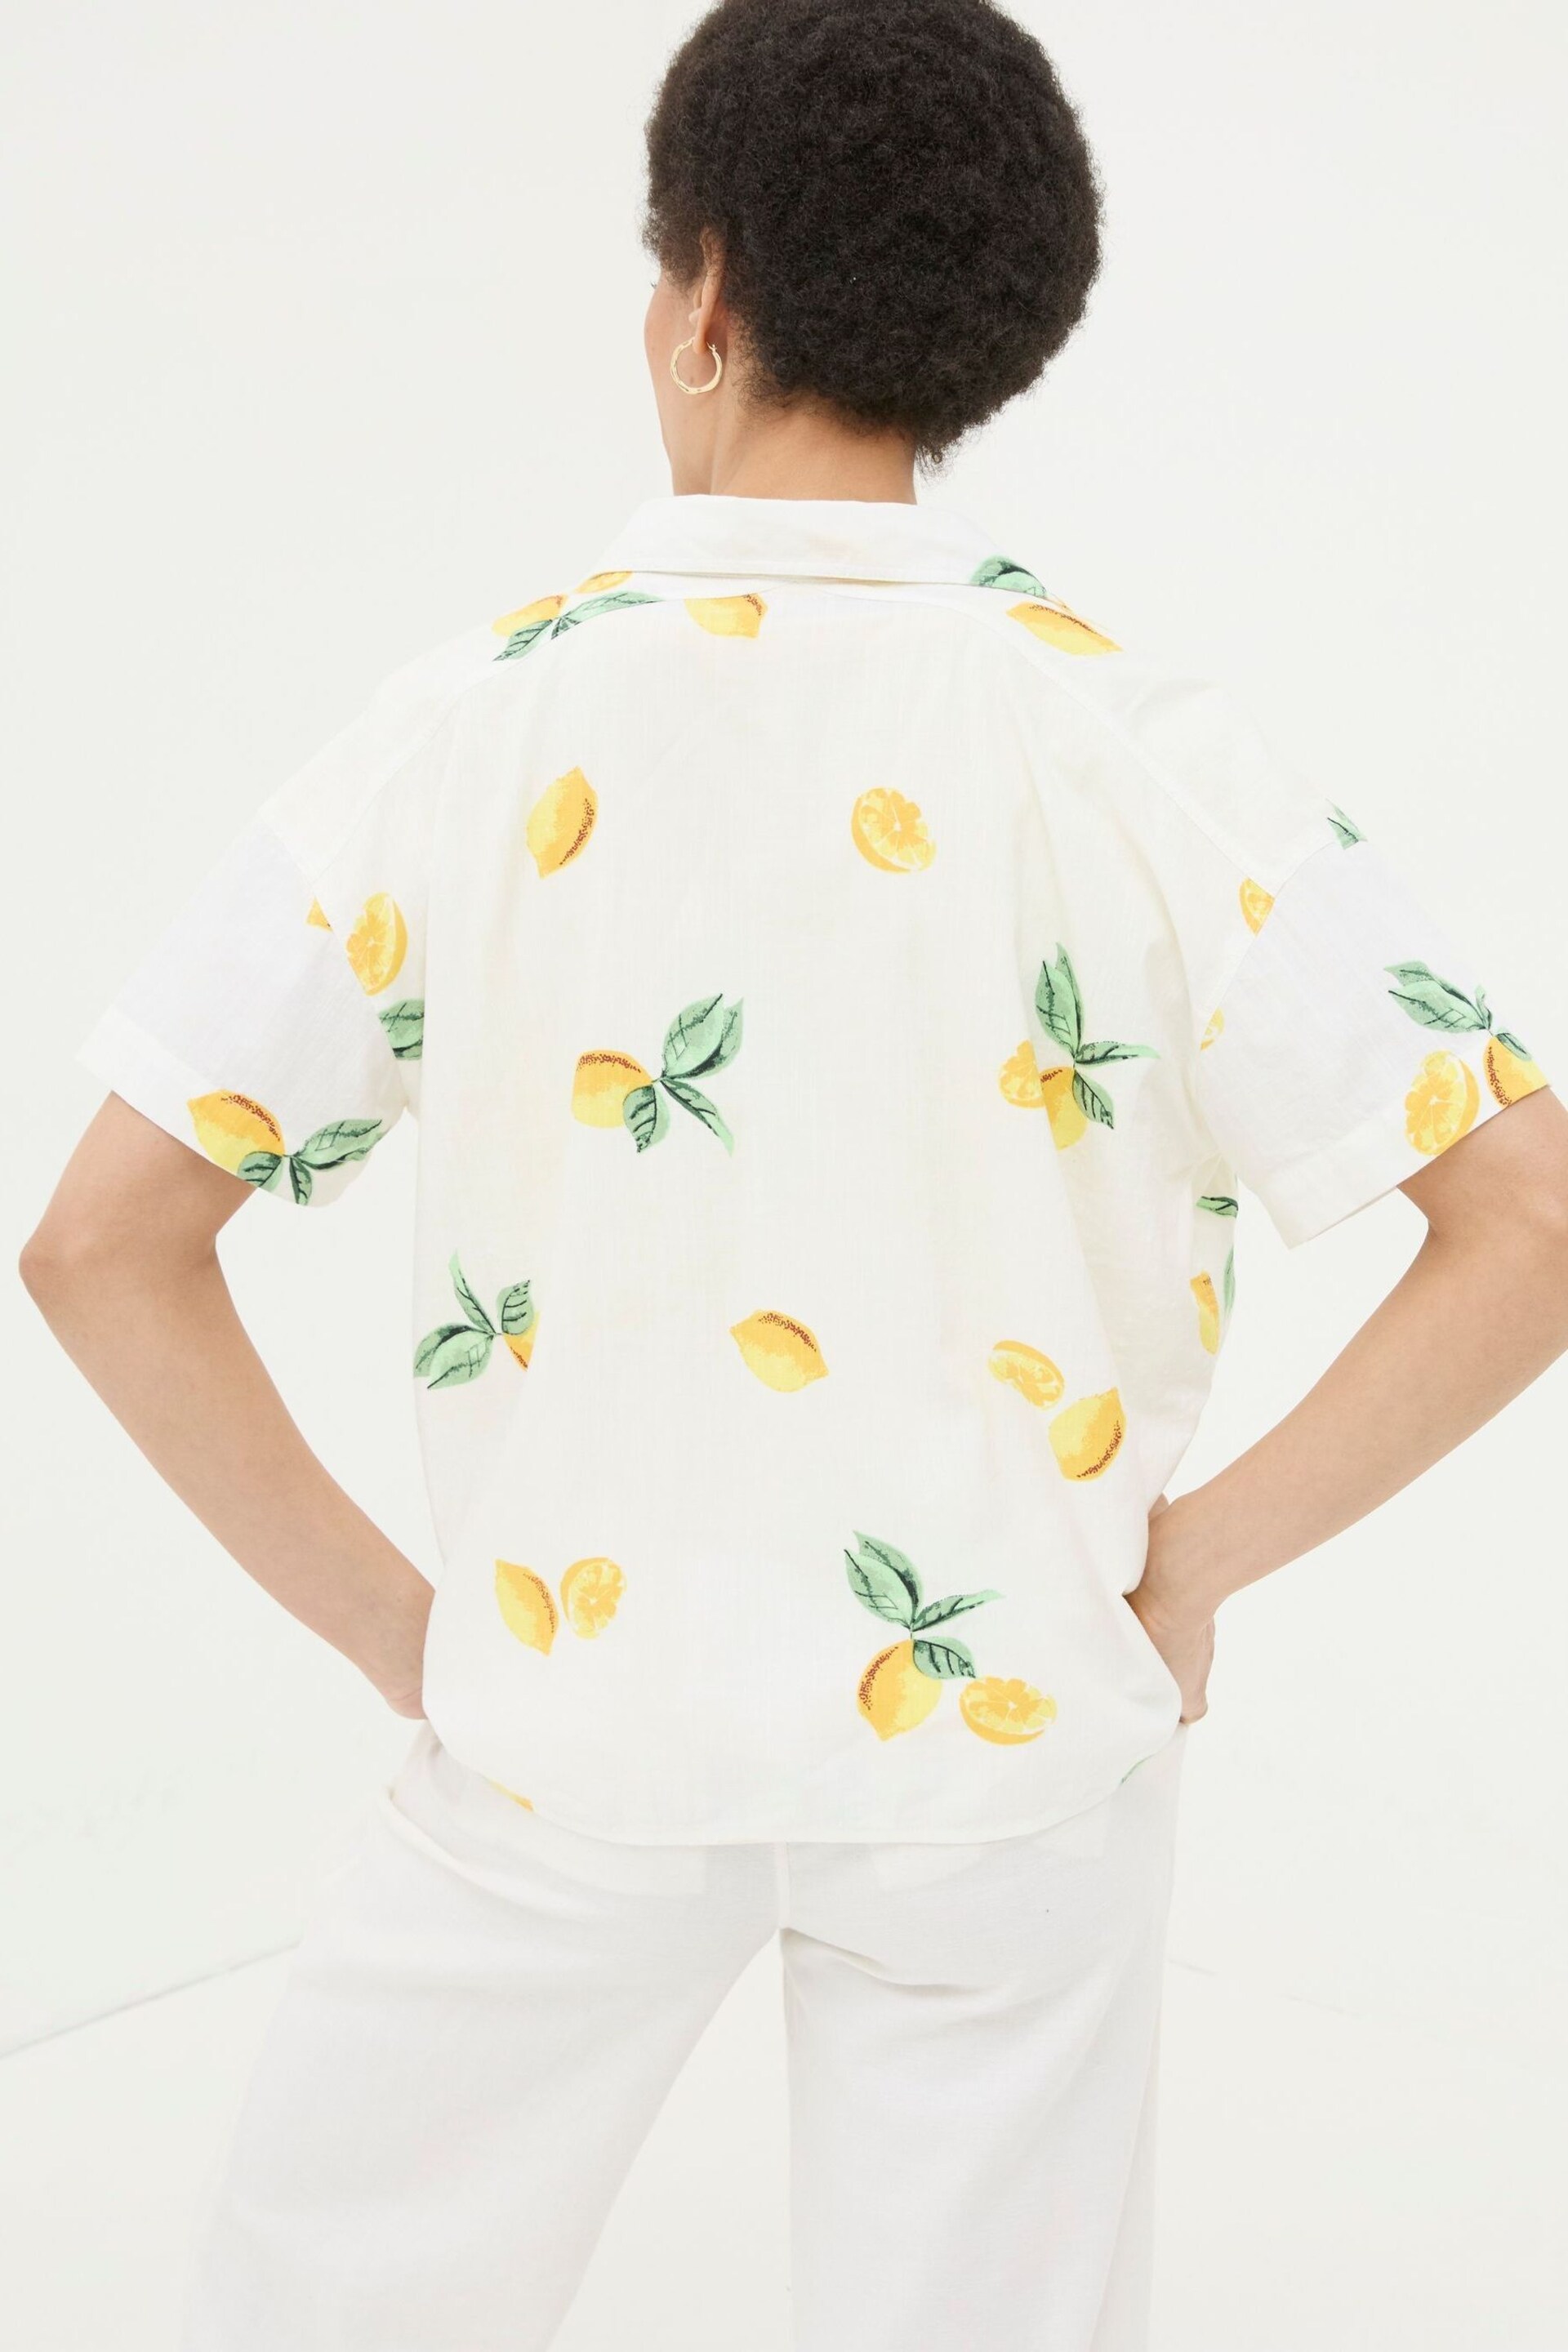 FatFace Natural Lemons Shirt - Image 3 of 6